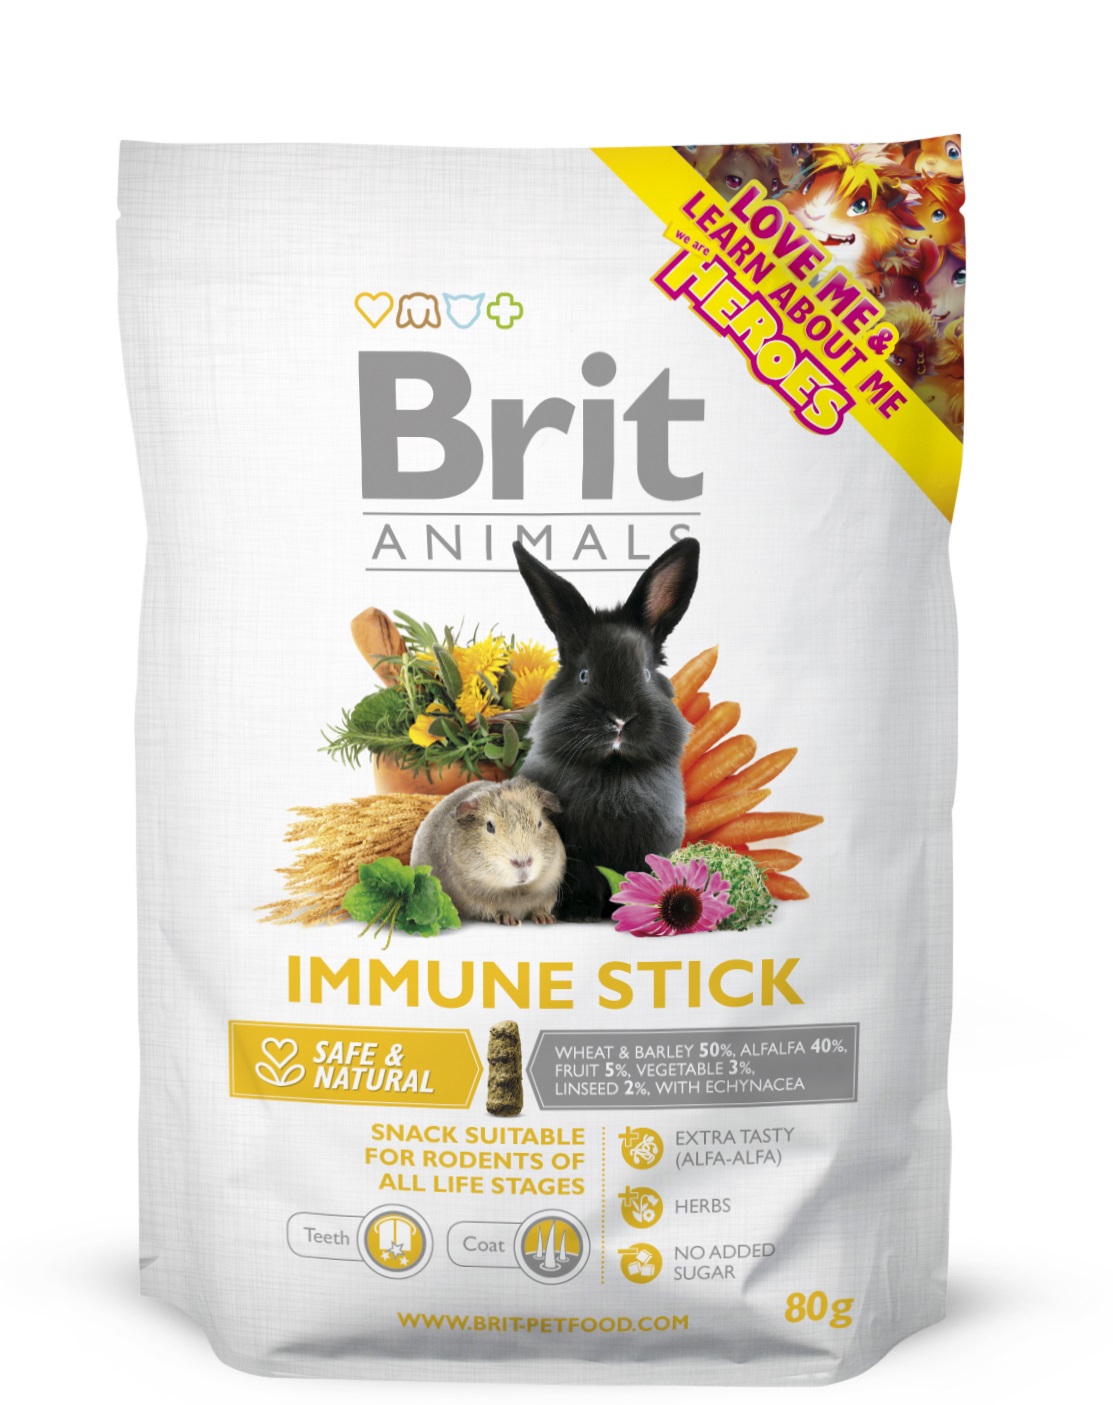 Brit Animals - Immune Stick for Rodents - 80g